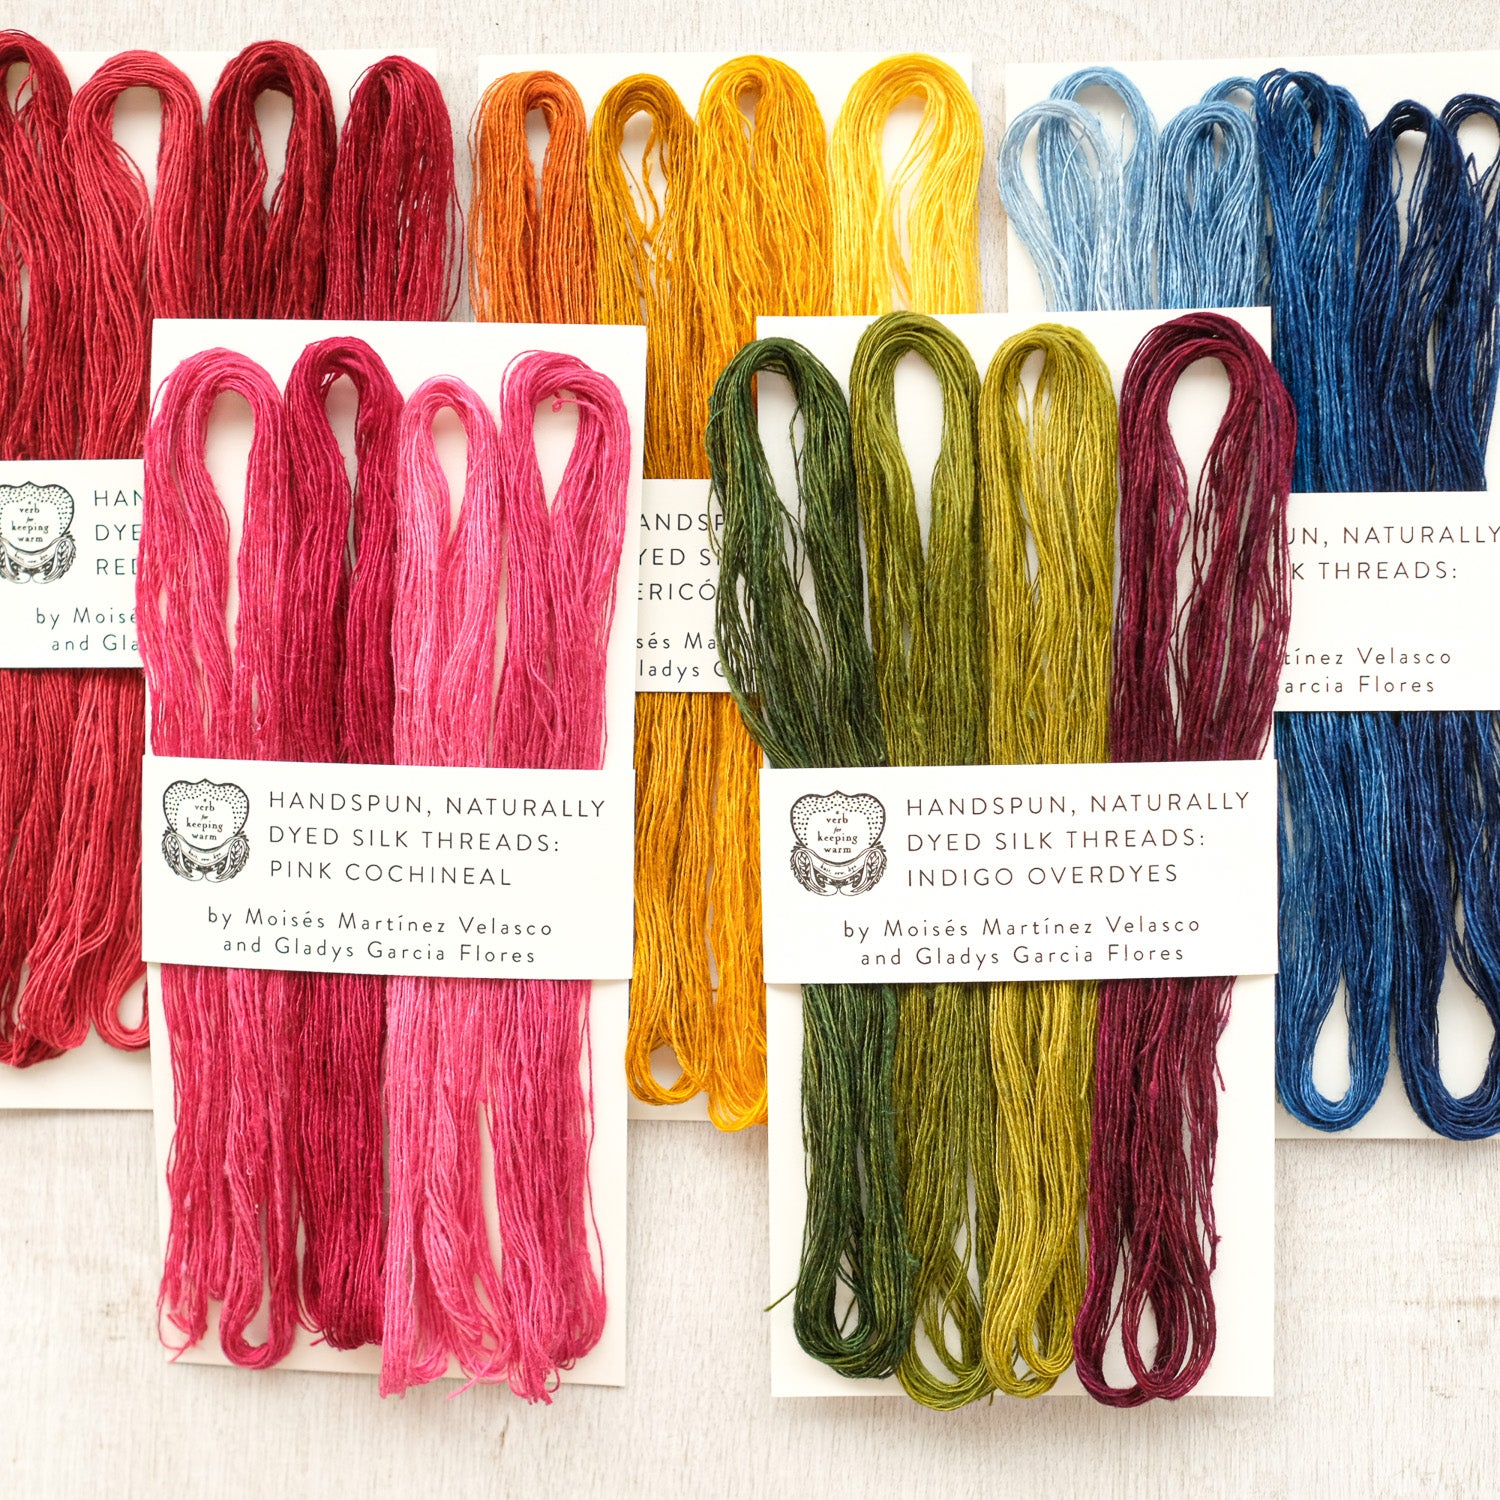 Handspun, Naturally-Dyed Silk Thread by Moisés Martínez Velasco y Gladys Garcia Flores